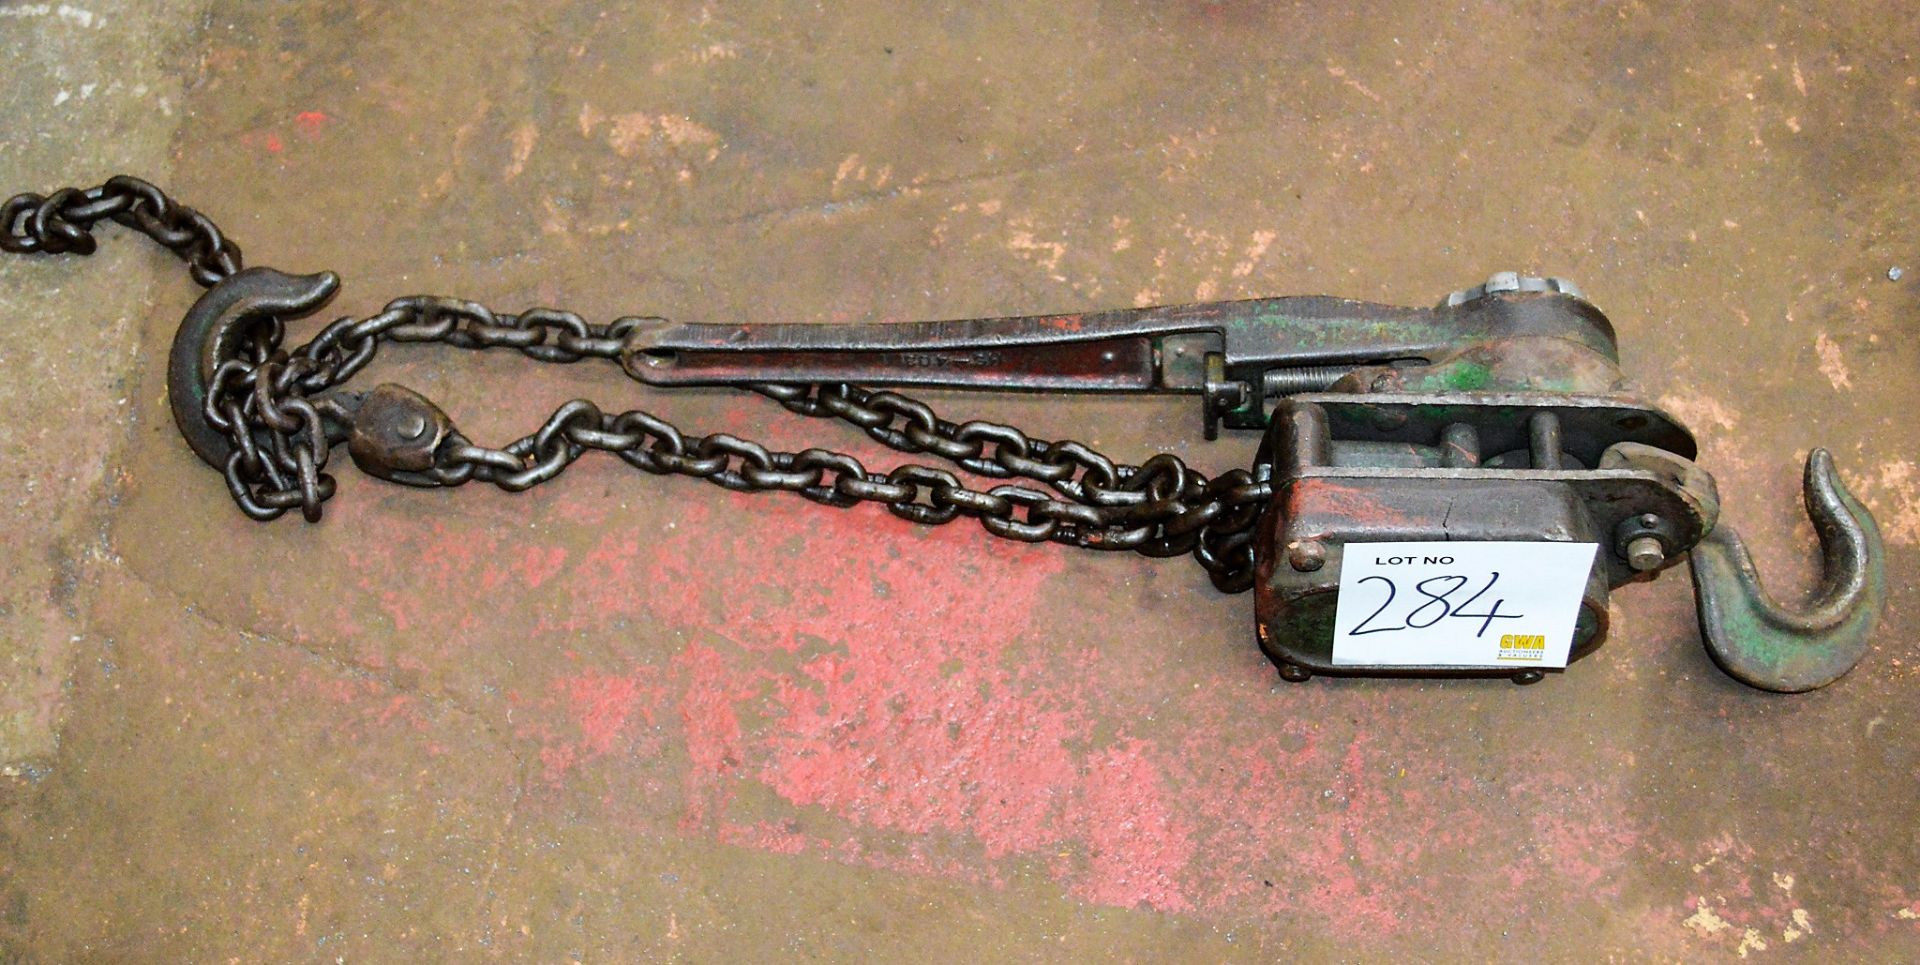 Chain lever hoist